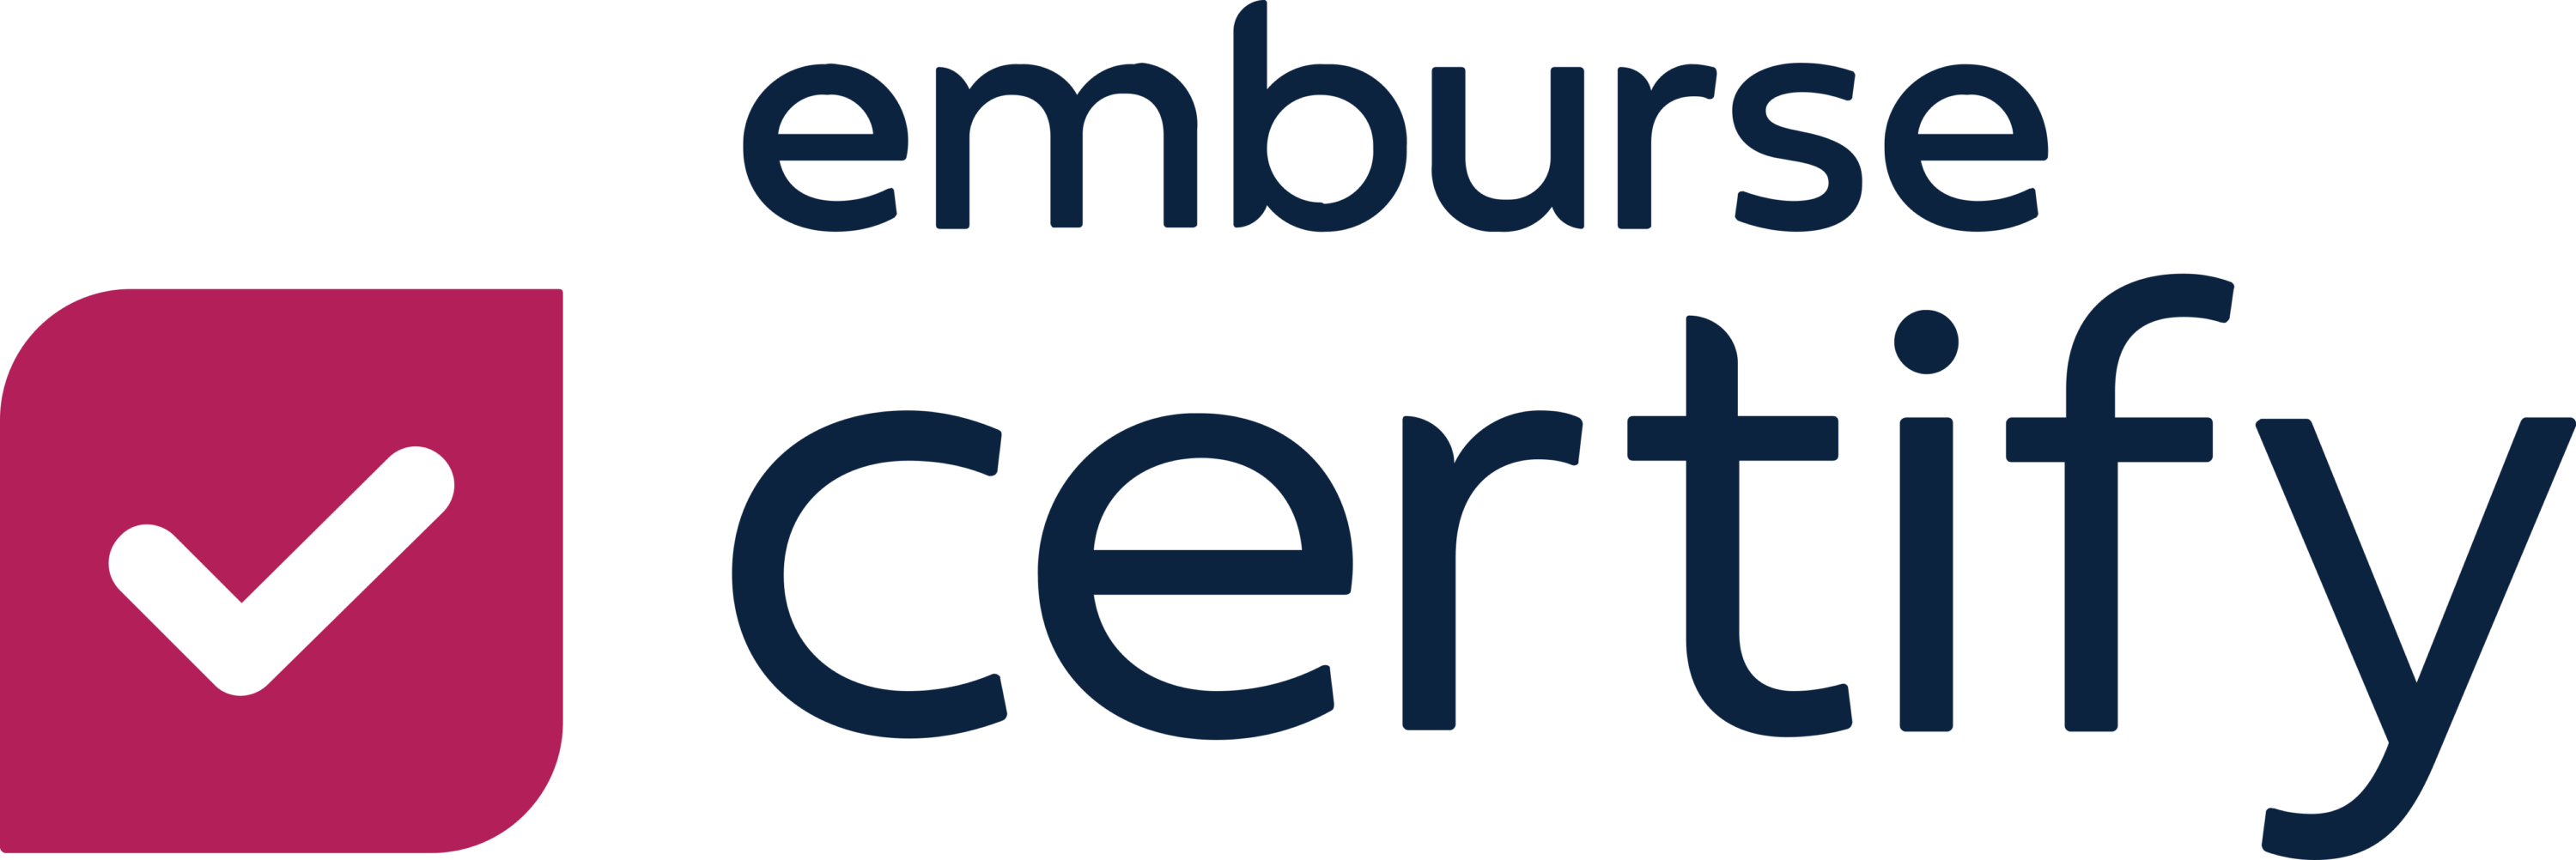 Emburse Certify Logo